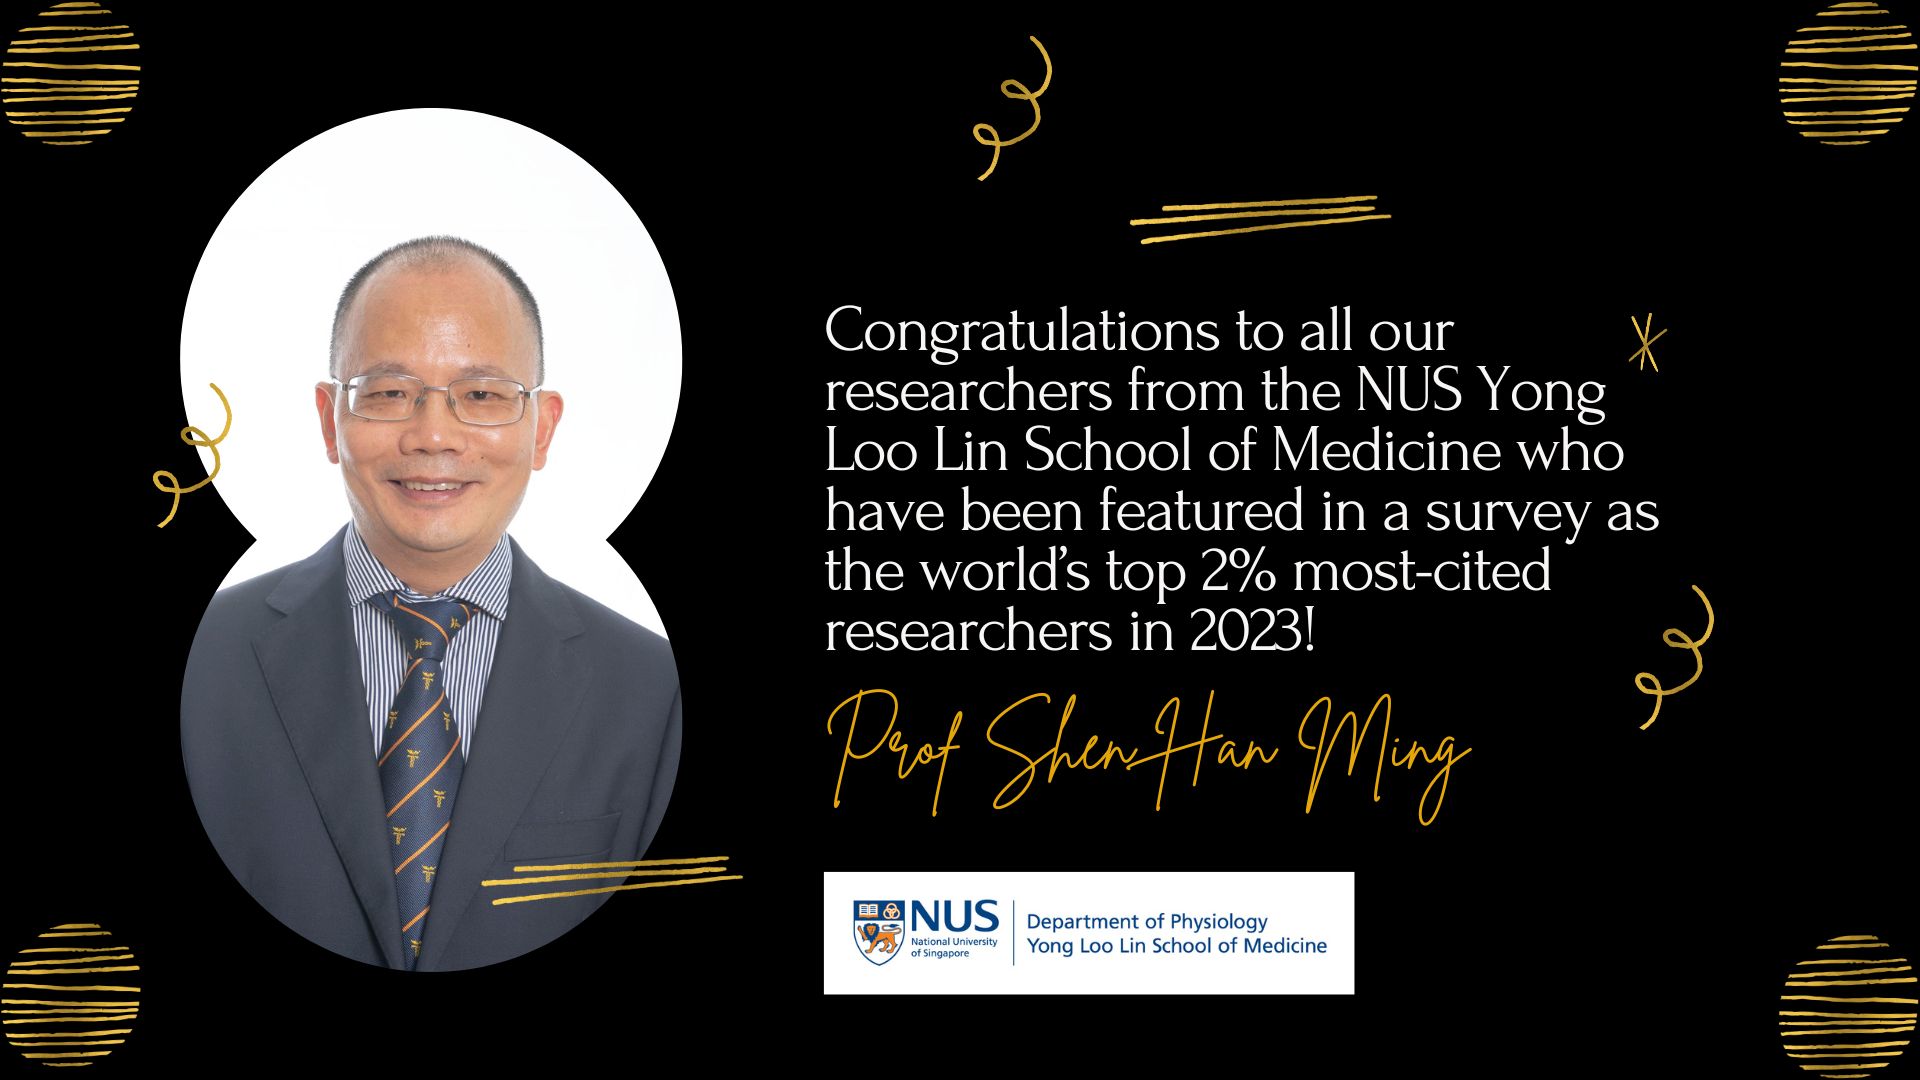 Congratulations to Prof Shen Han Ming!